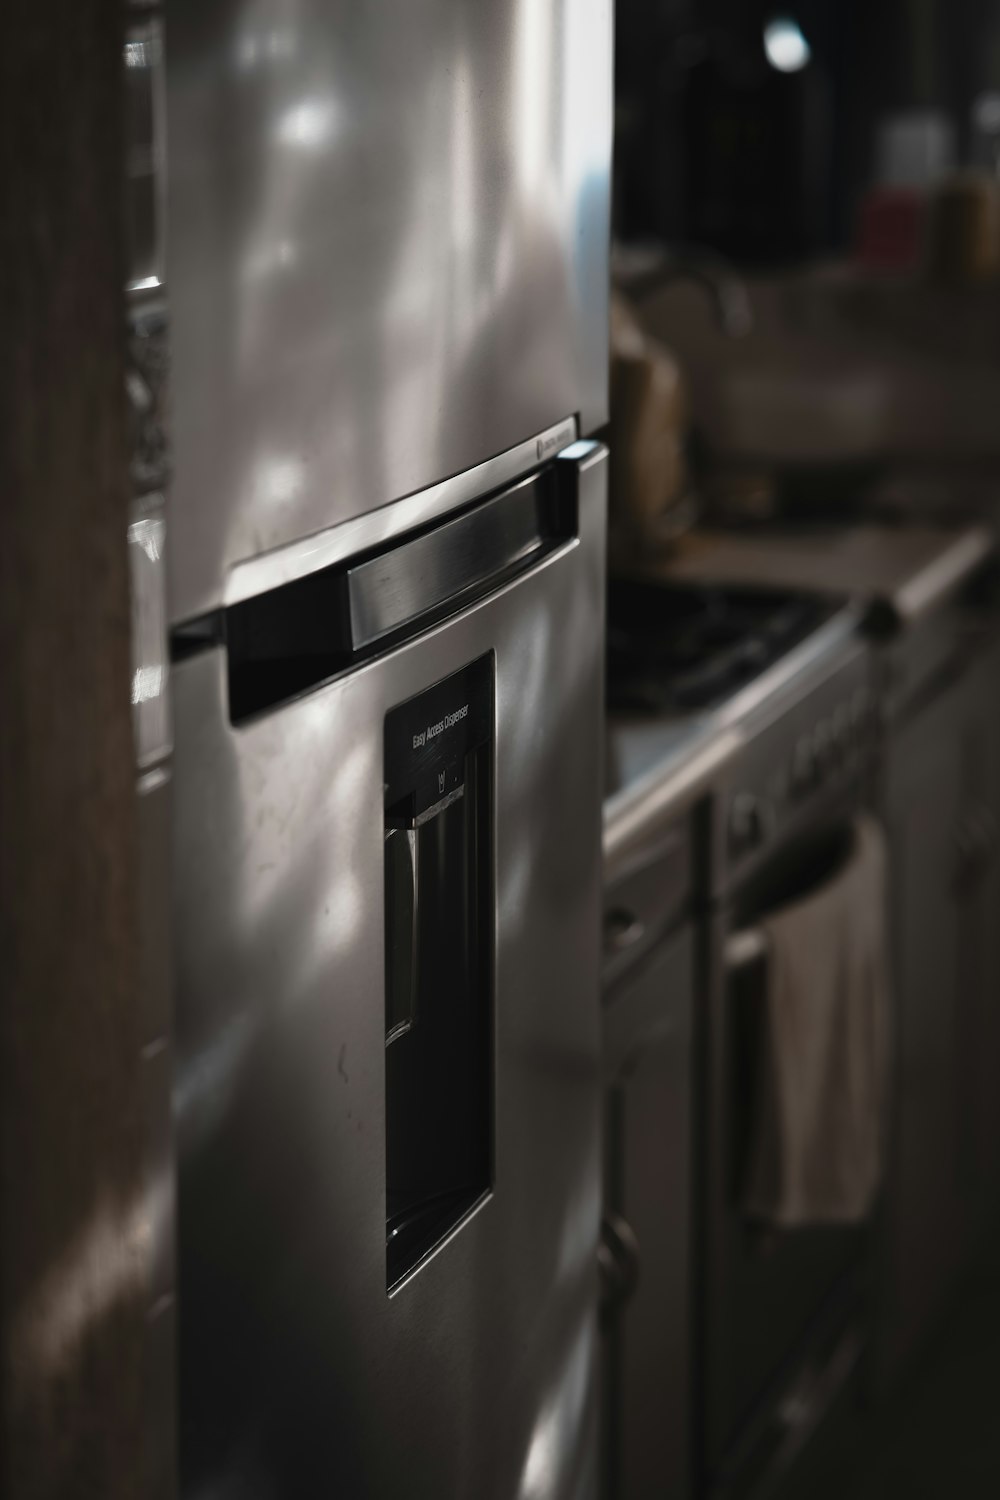 a metallic refrigerator freezer sitting inside of a kitchen